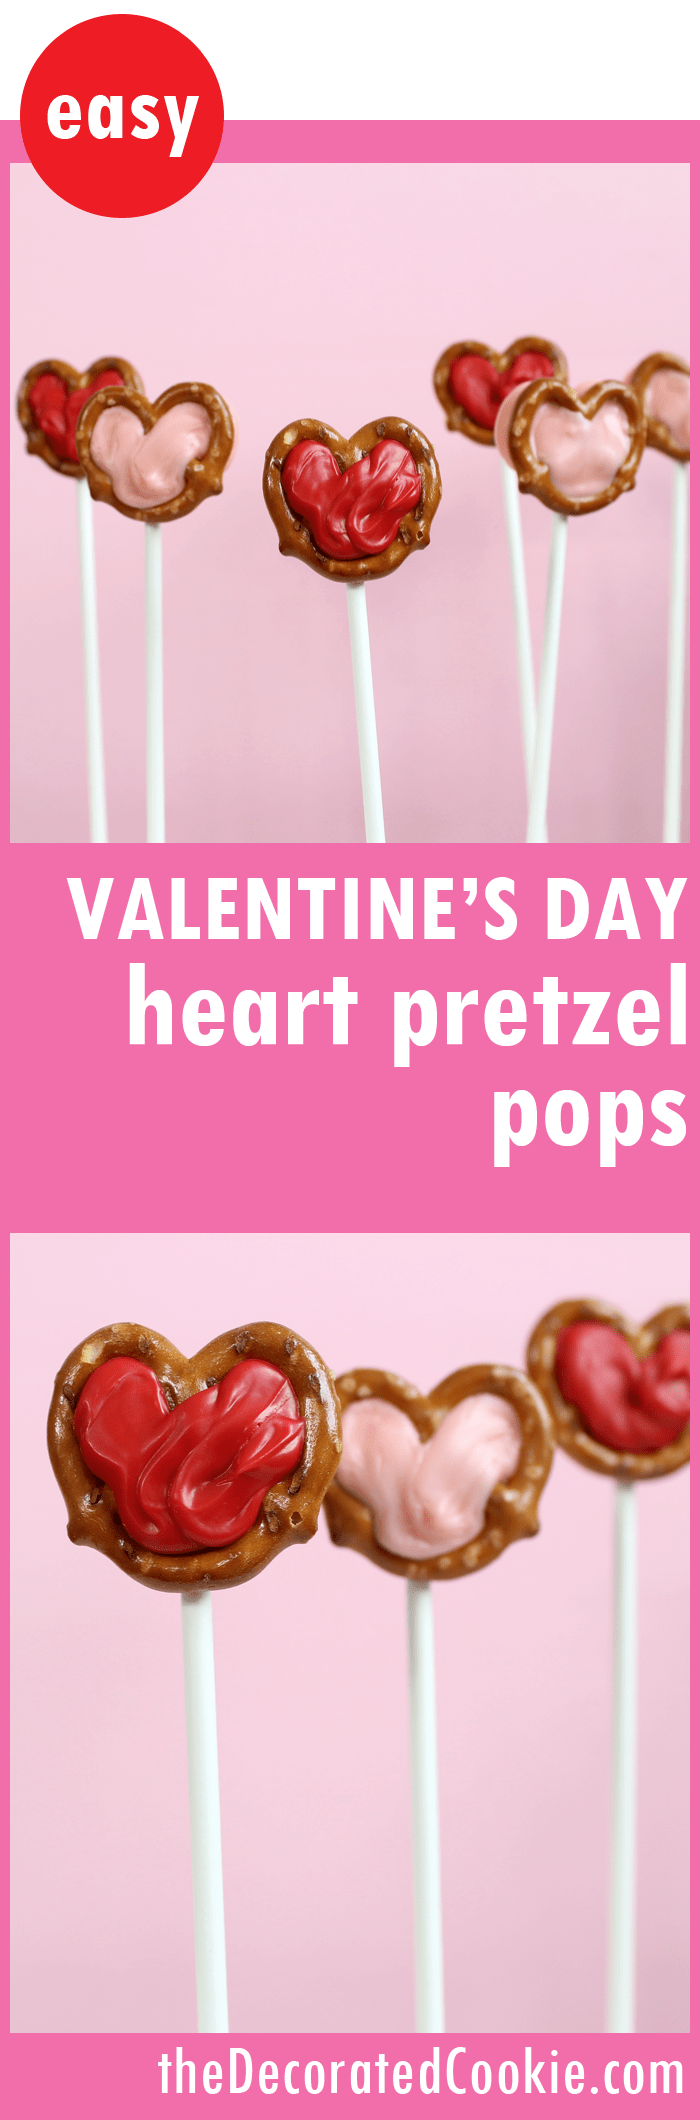 heart pretzel pops for Valentine's Day treats 